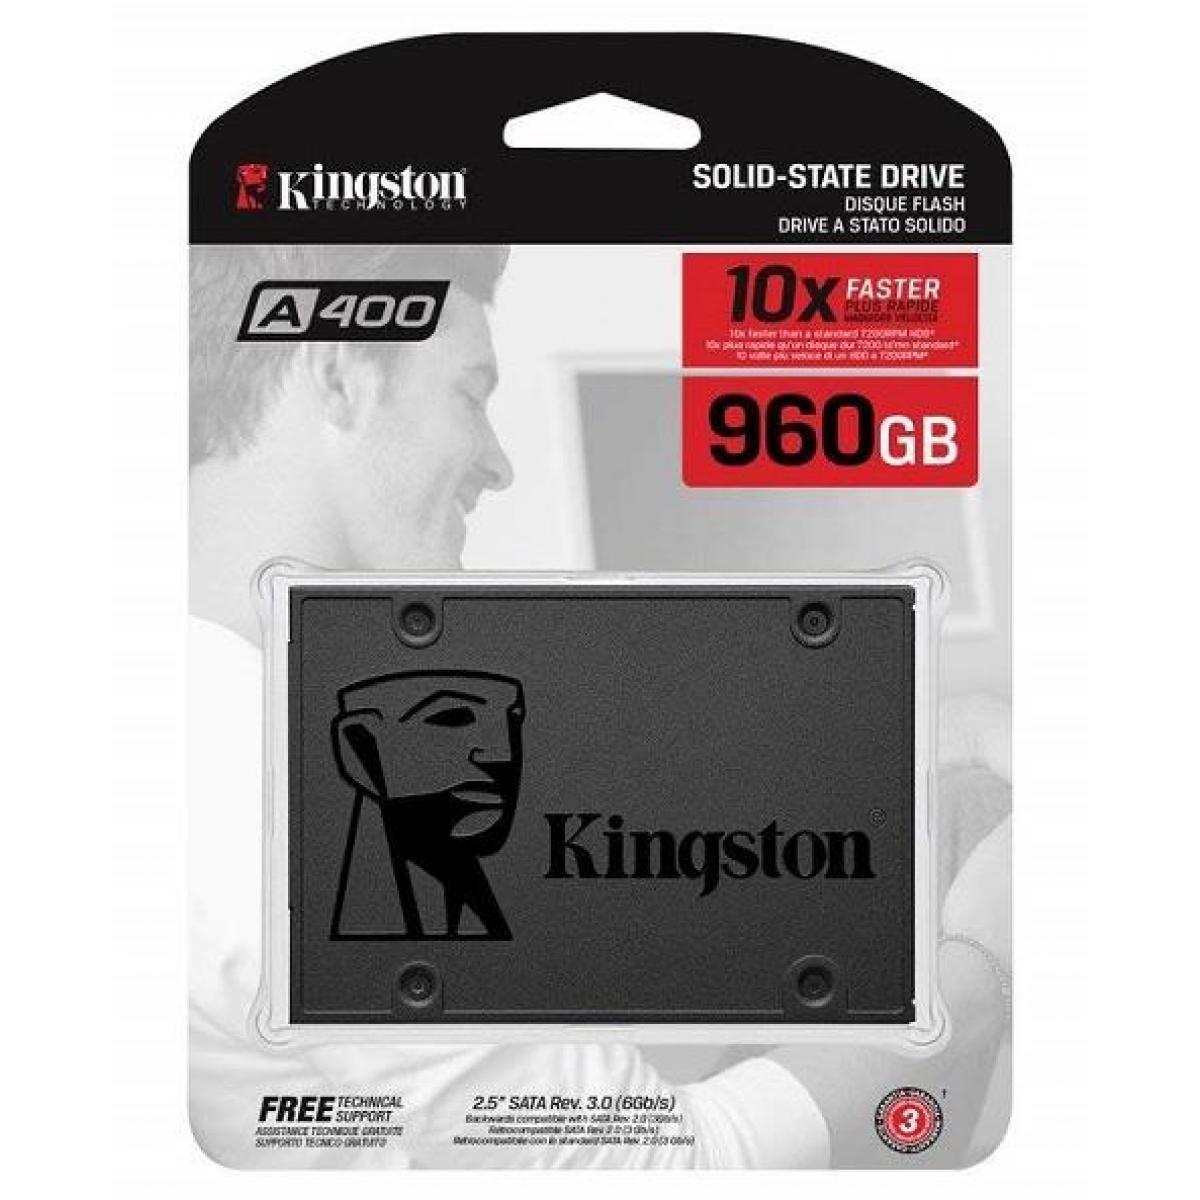 Kingston A400 960GB SATA III Solid State Drive (SSD)